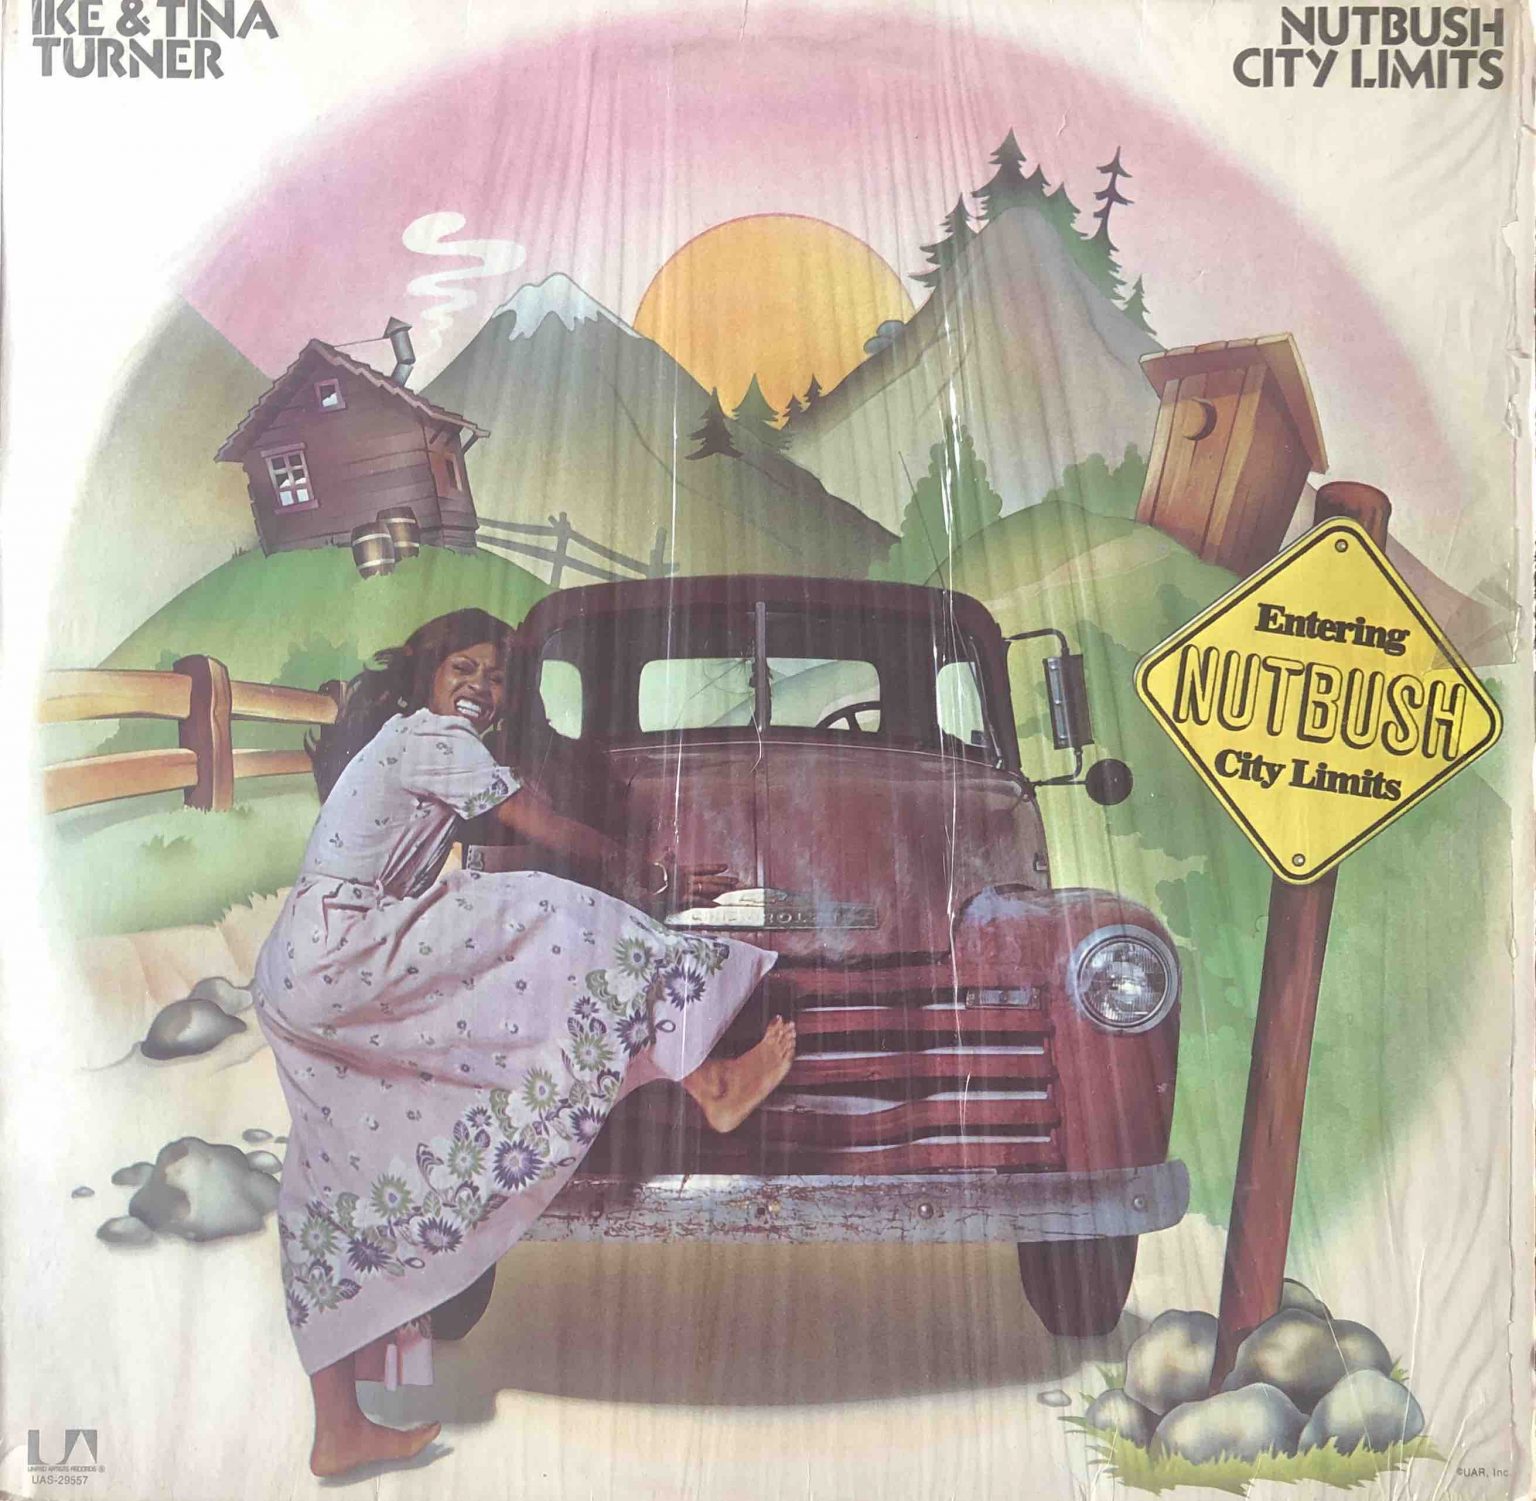 Ike & Tina Turner – Nutbush City Limits LP